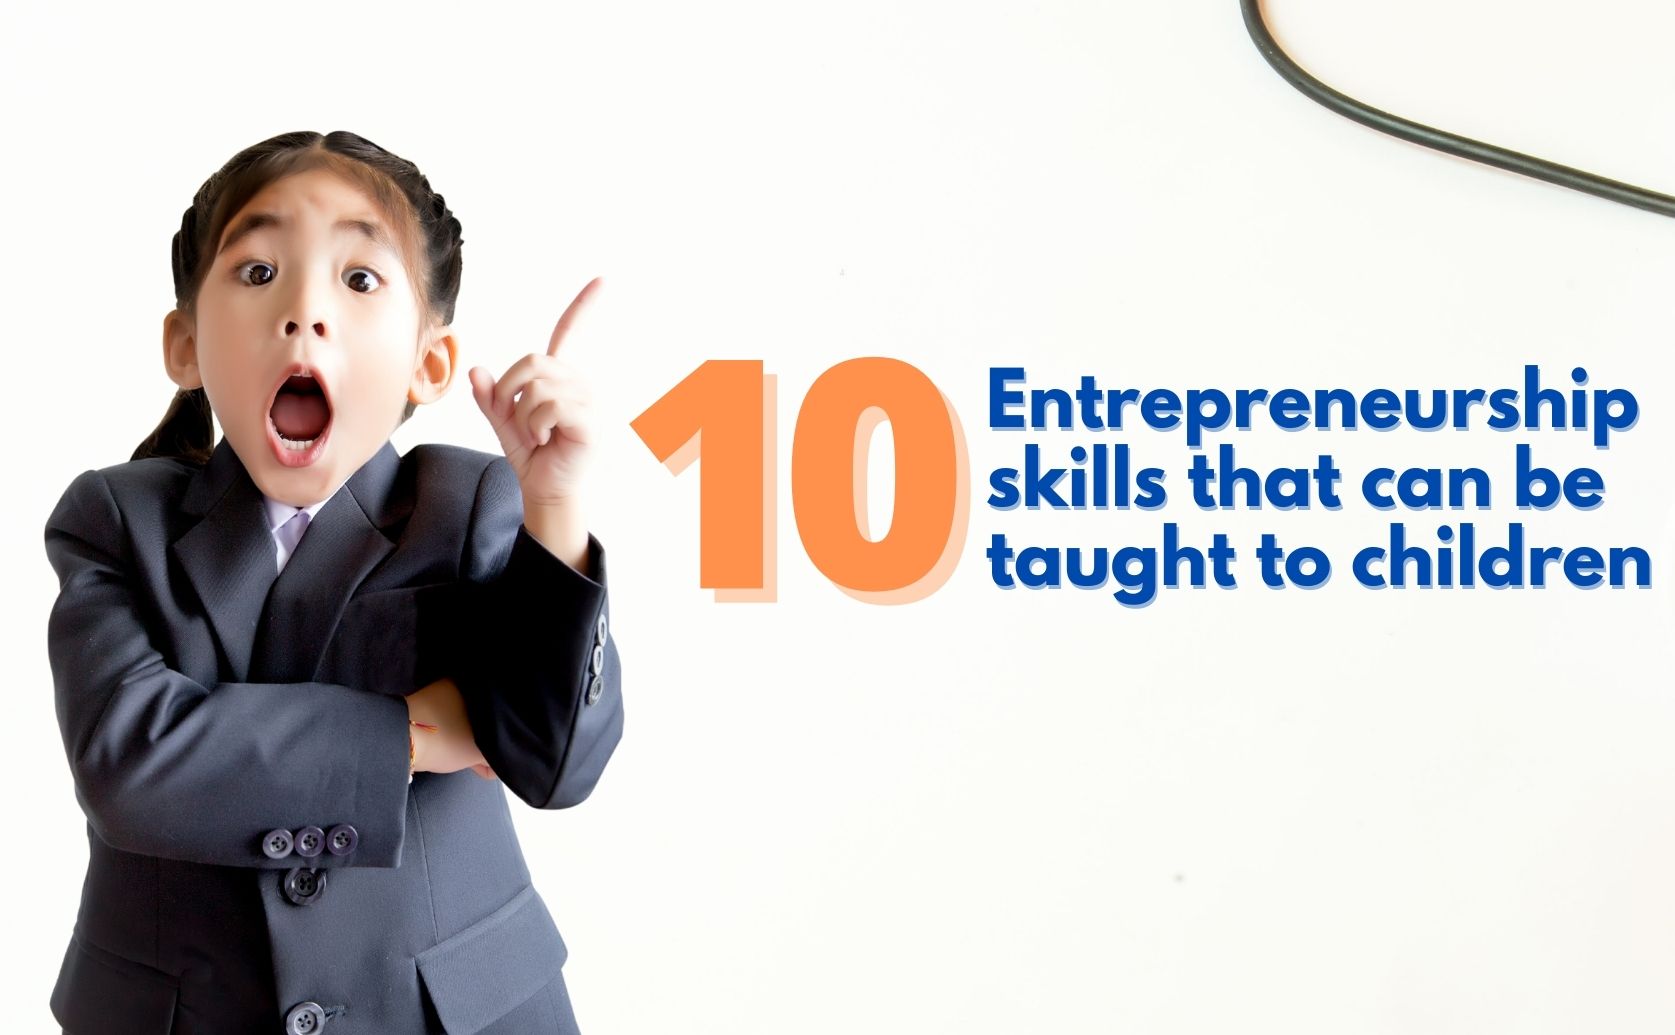 10 Entrepreneurship Skills that can be taught to children